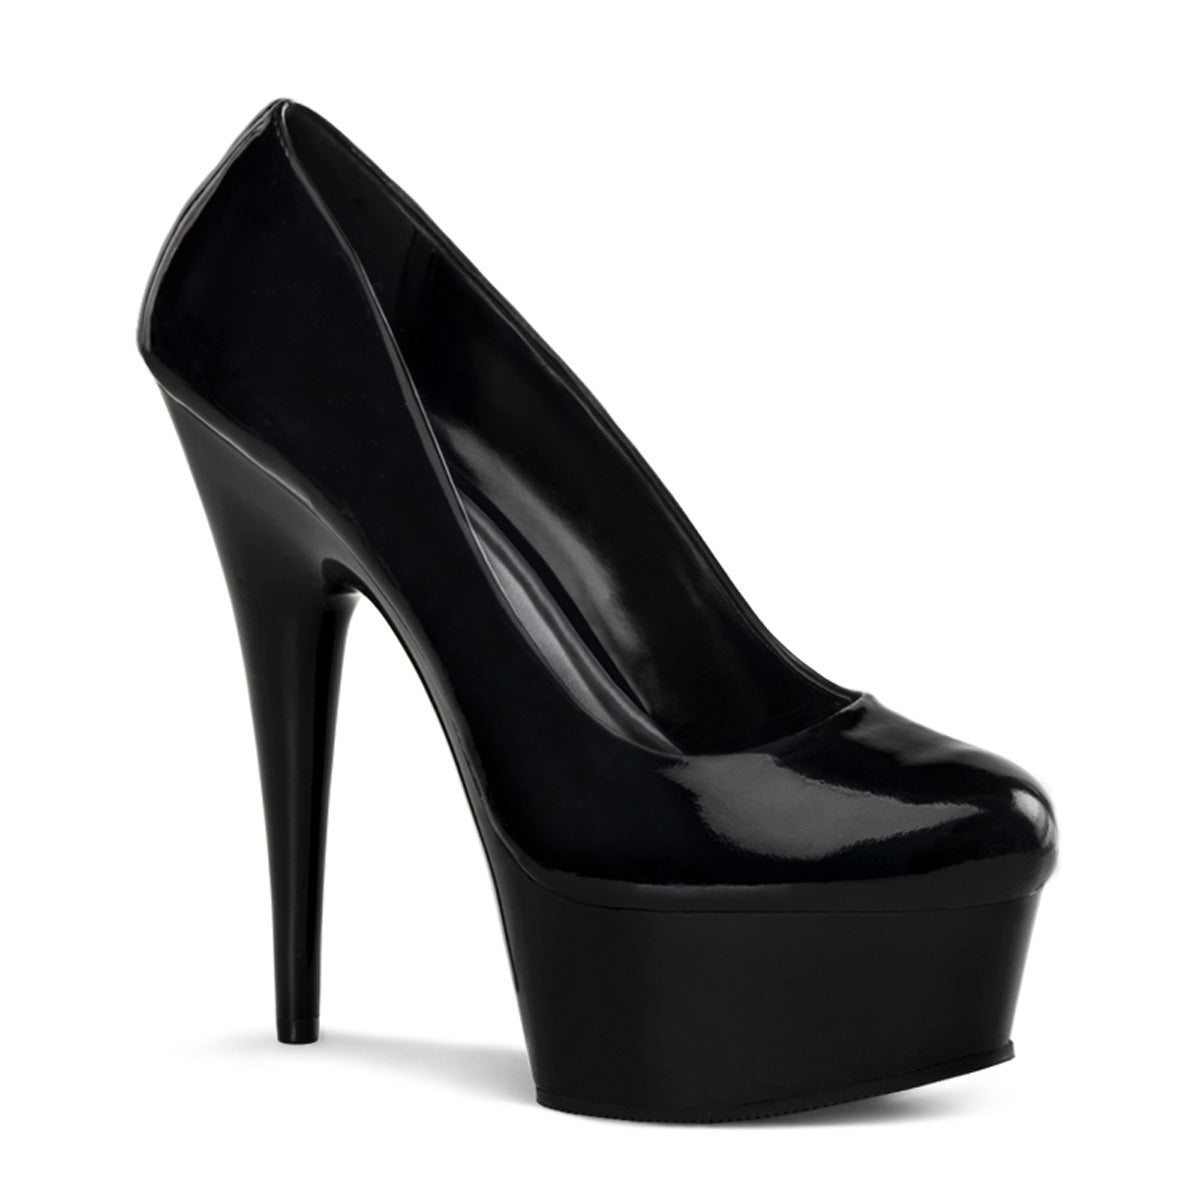 DELIGHT-685 6" Heel Black Patent  Stripper Platforms High Heels